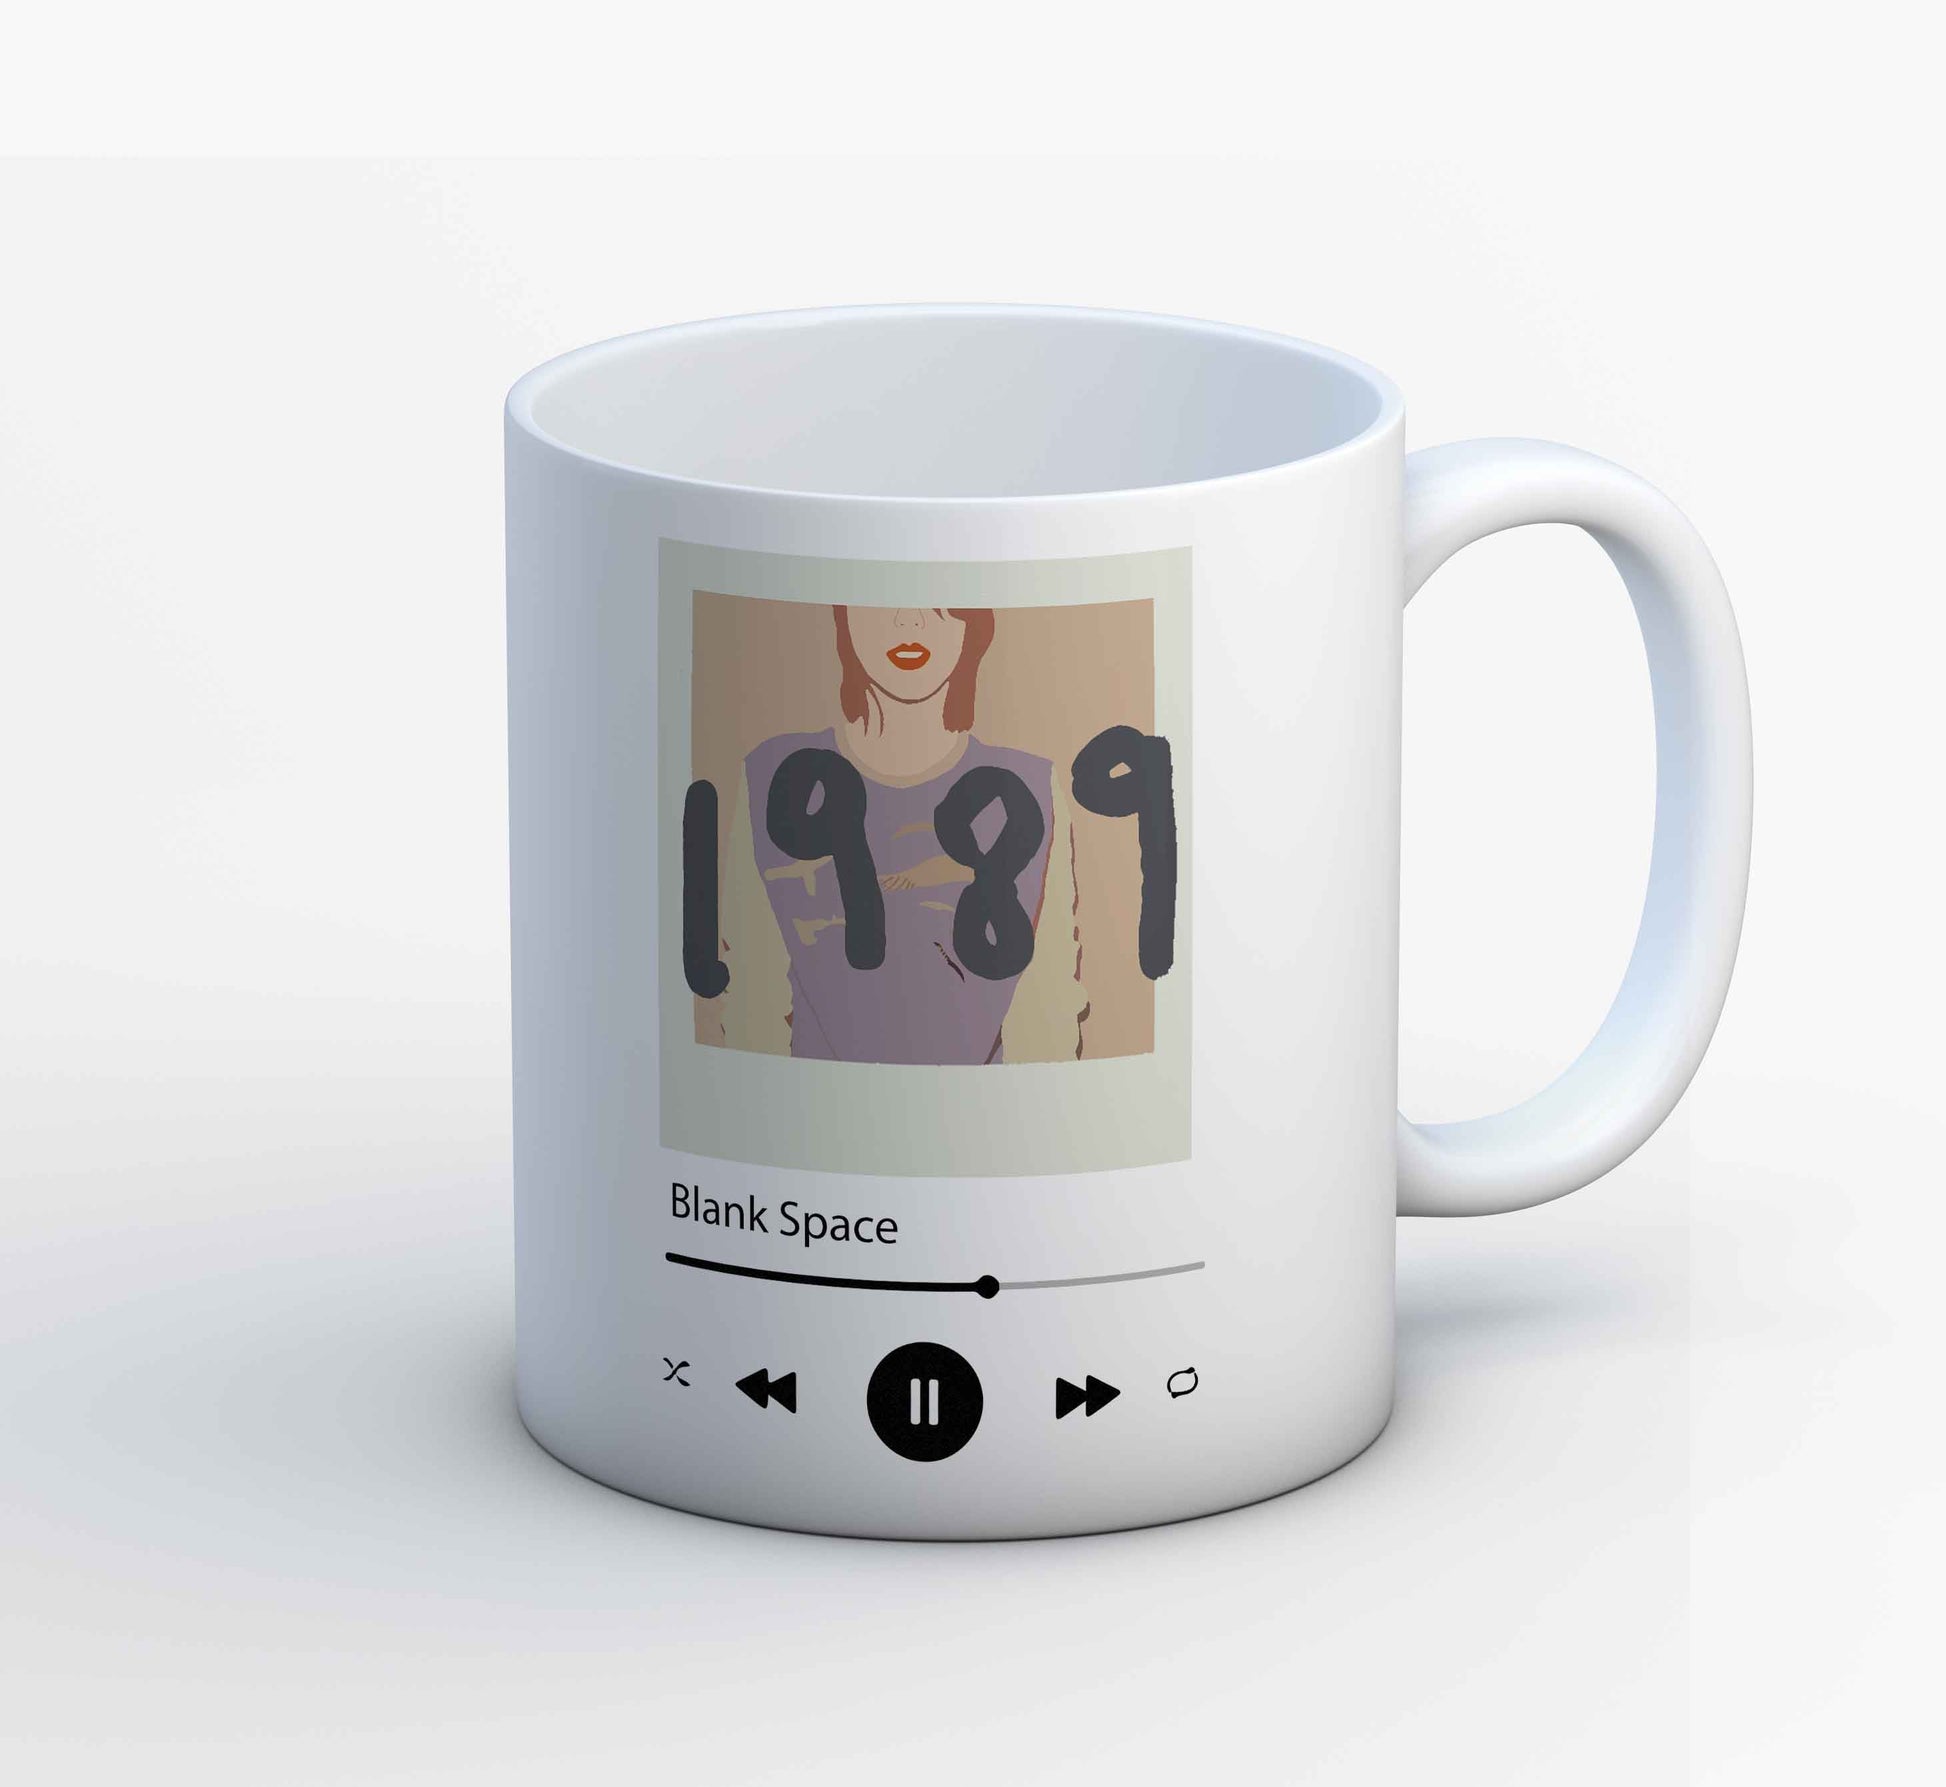 Taylor Swift Coffee Mugs for Sale